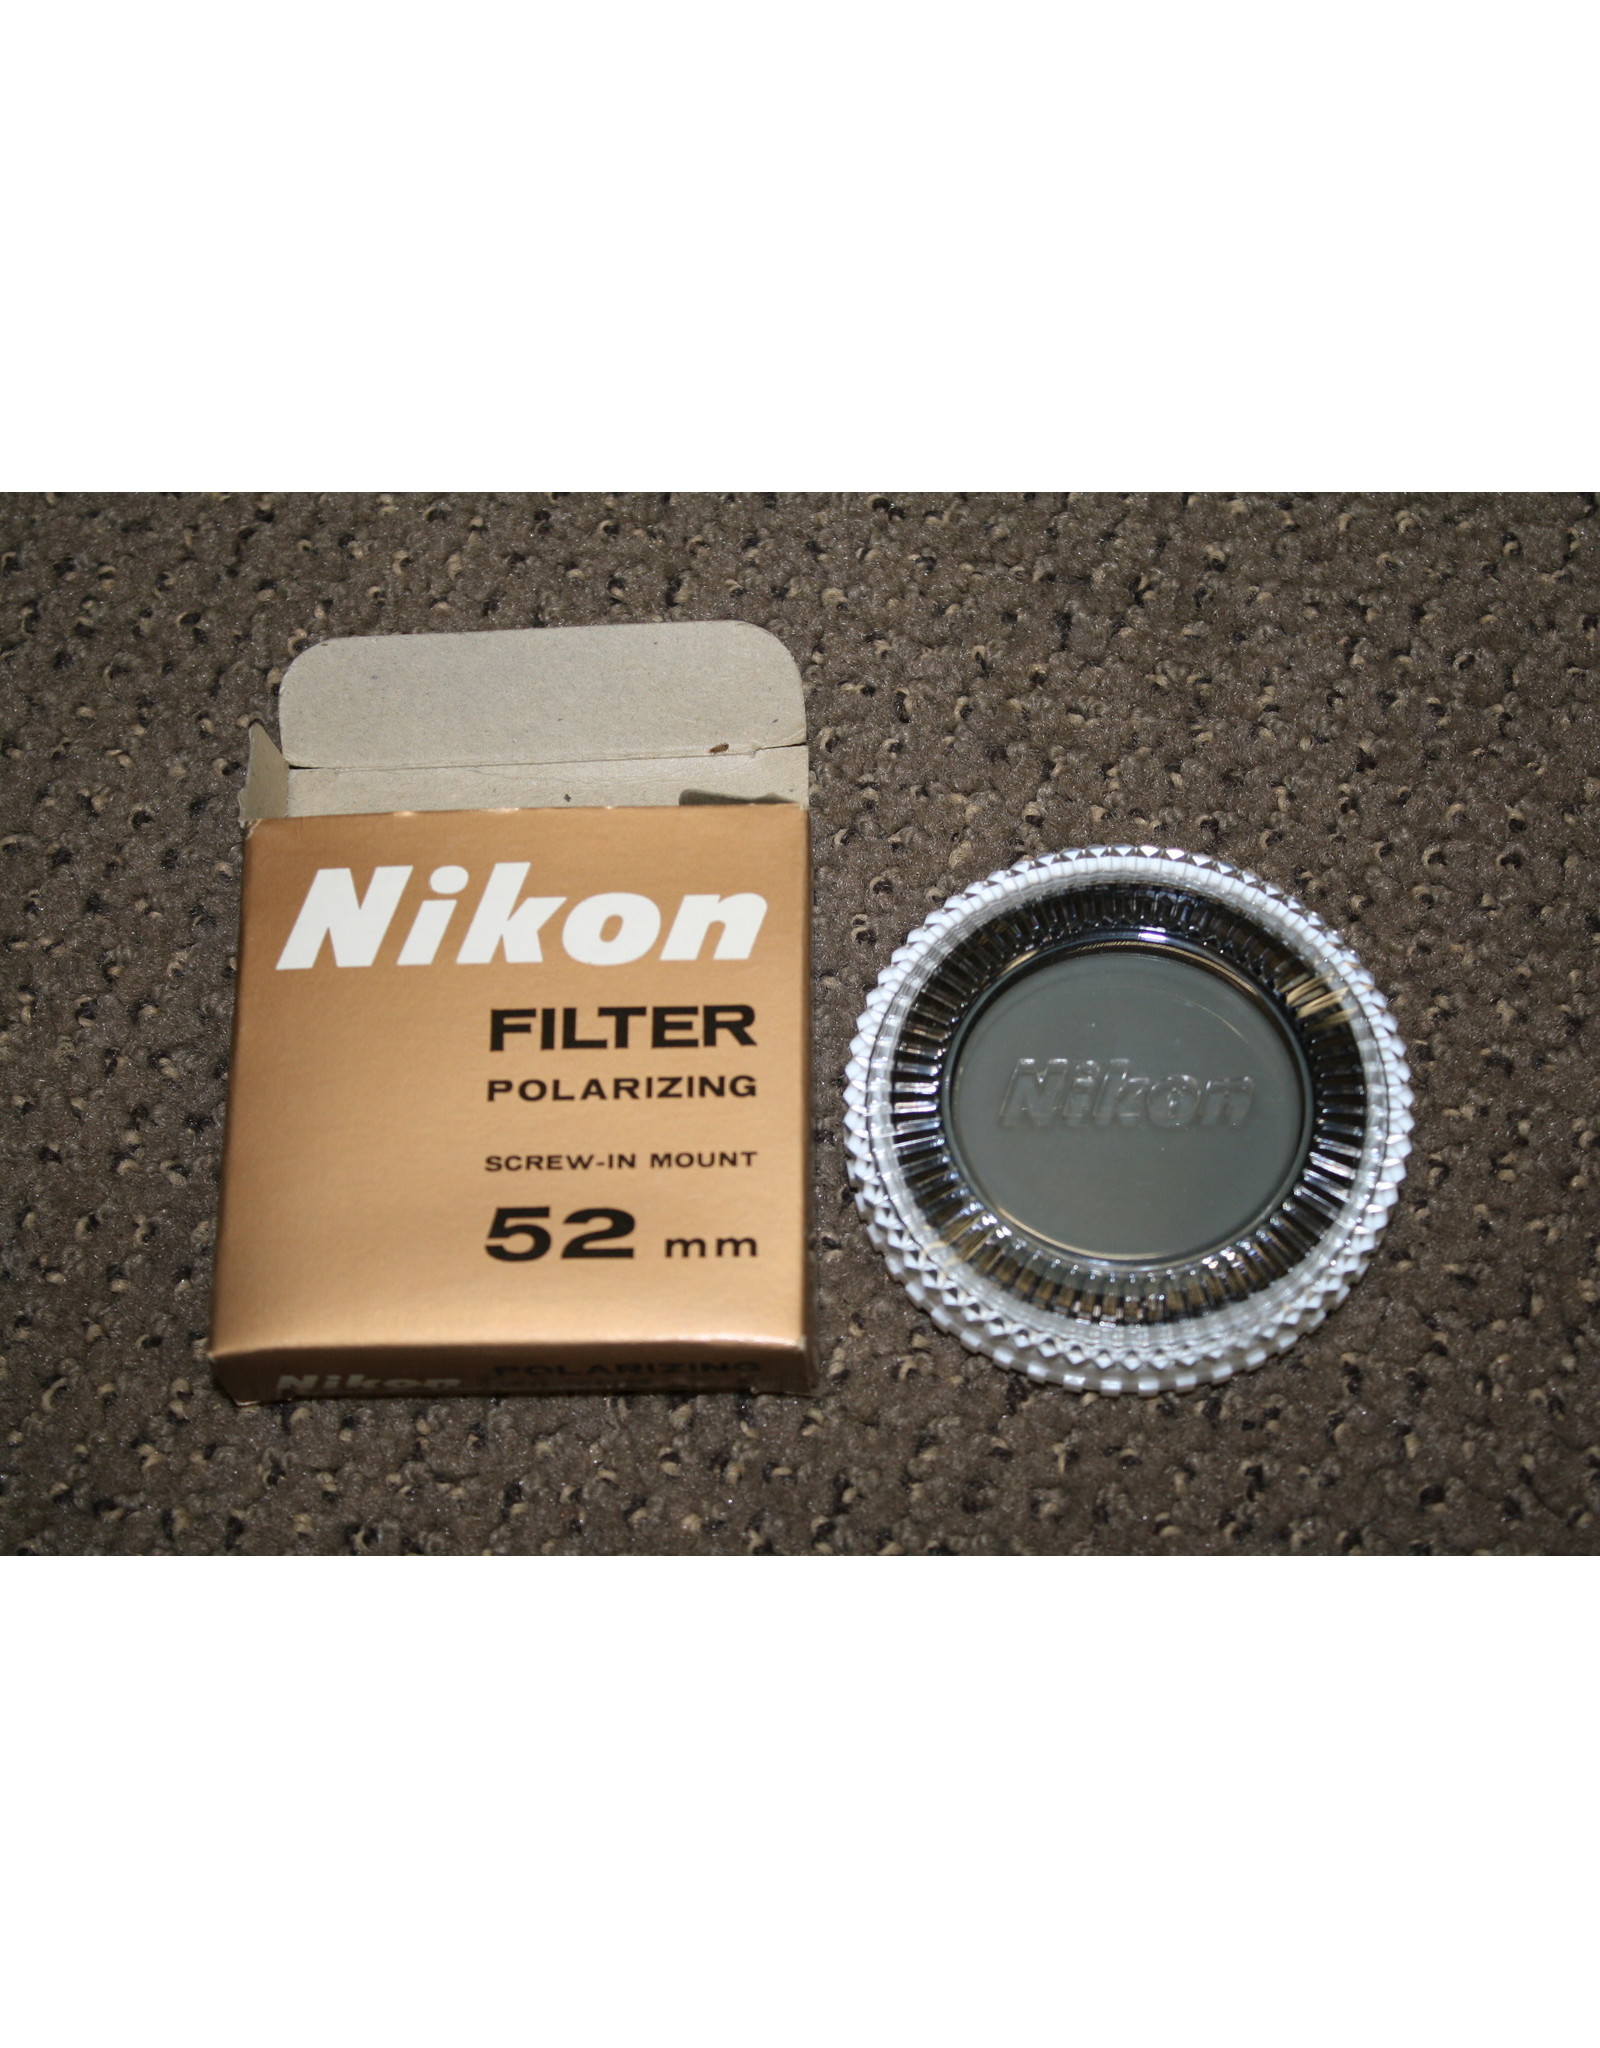 Nikon 52mm Polarizer Made in Japan